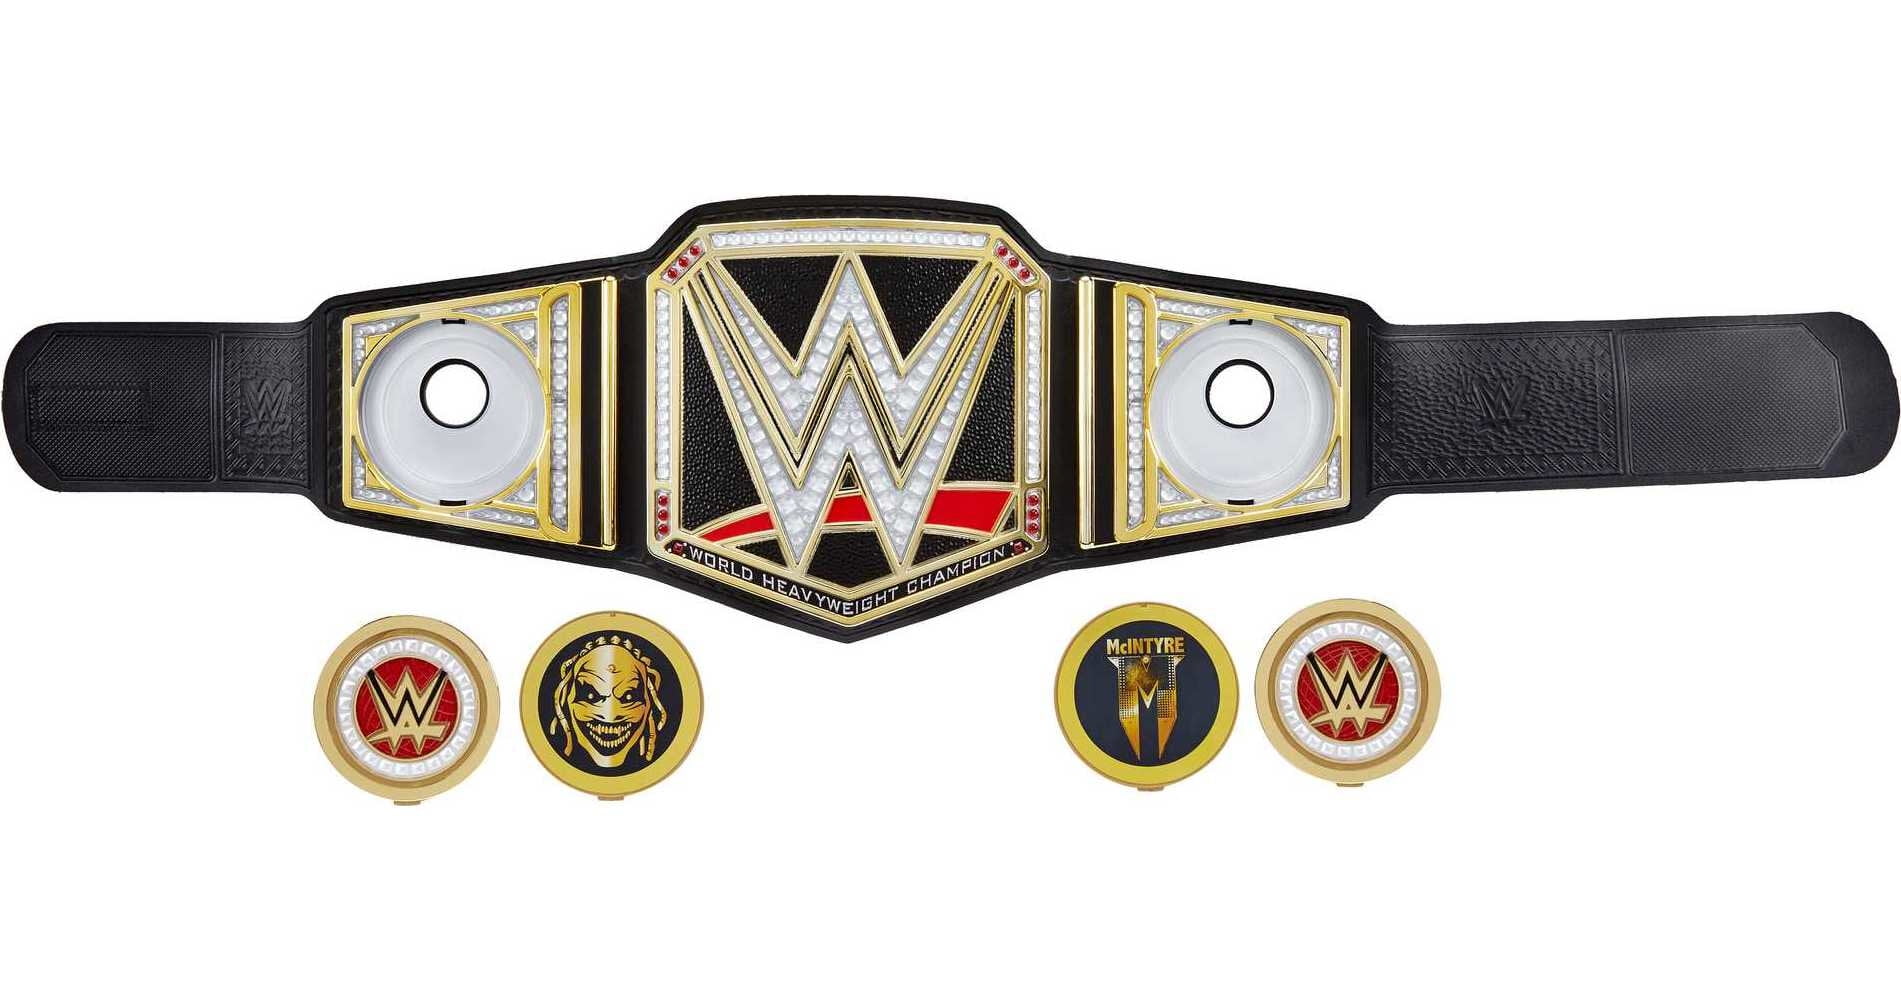 WWE Championship Showdown WWE Championship, Role-Play Title Belt with Sideplates - Walmart.com